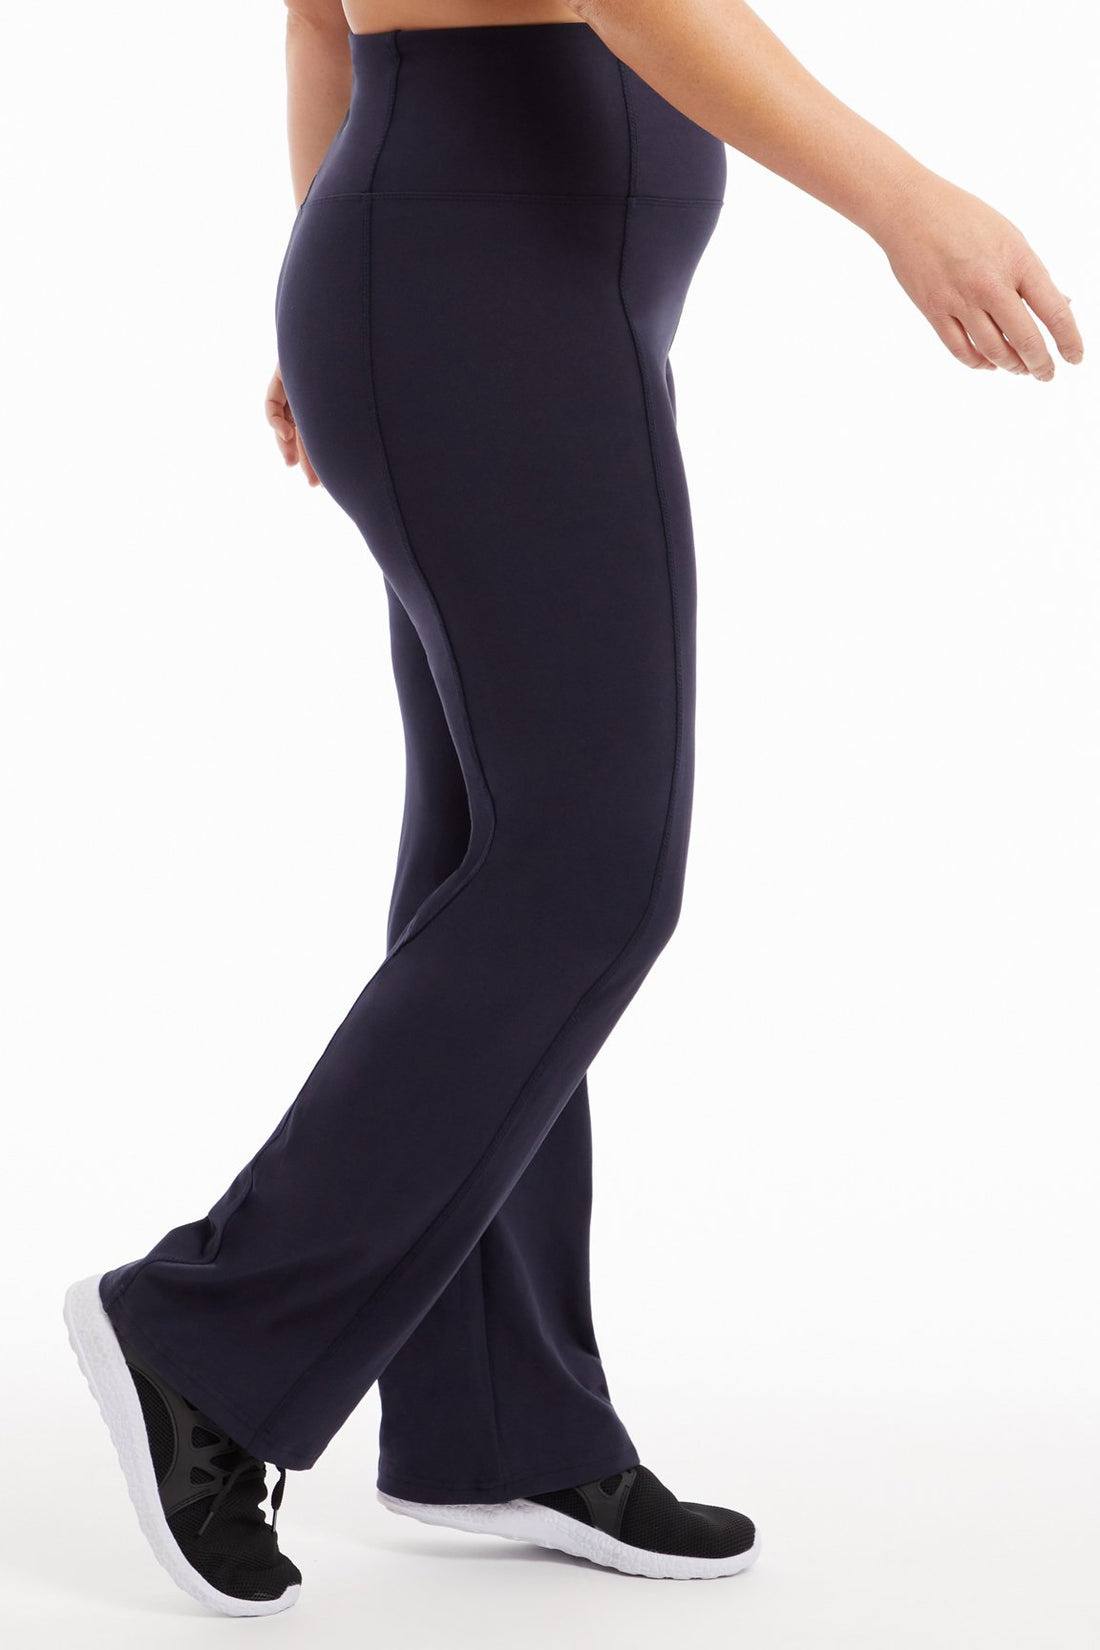 OLENNZ Plus Size Leggings for Women 2X-Large High Waist Workout Black Yoga  Pants 